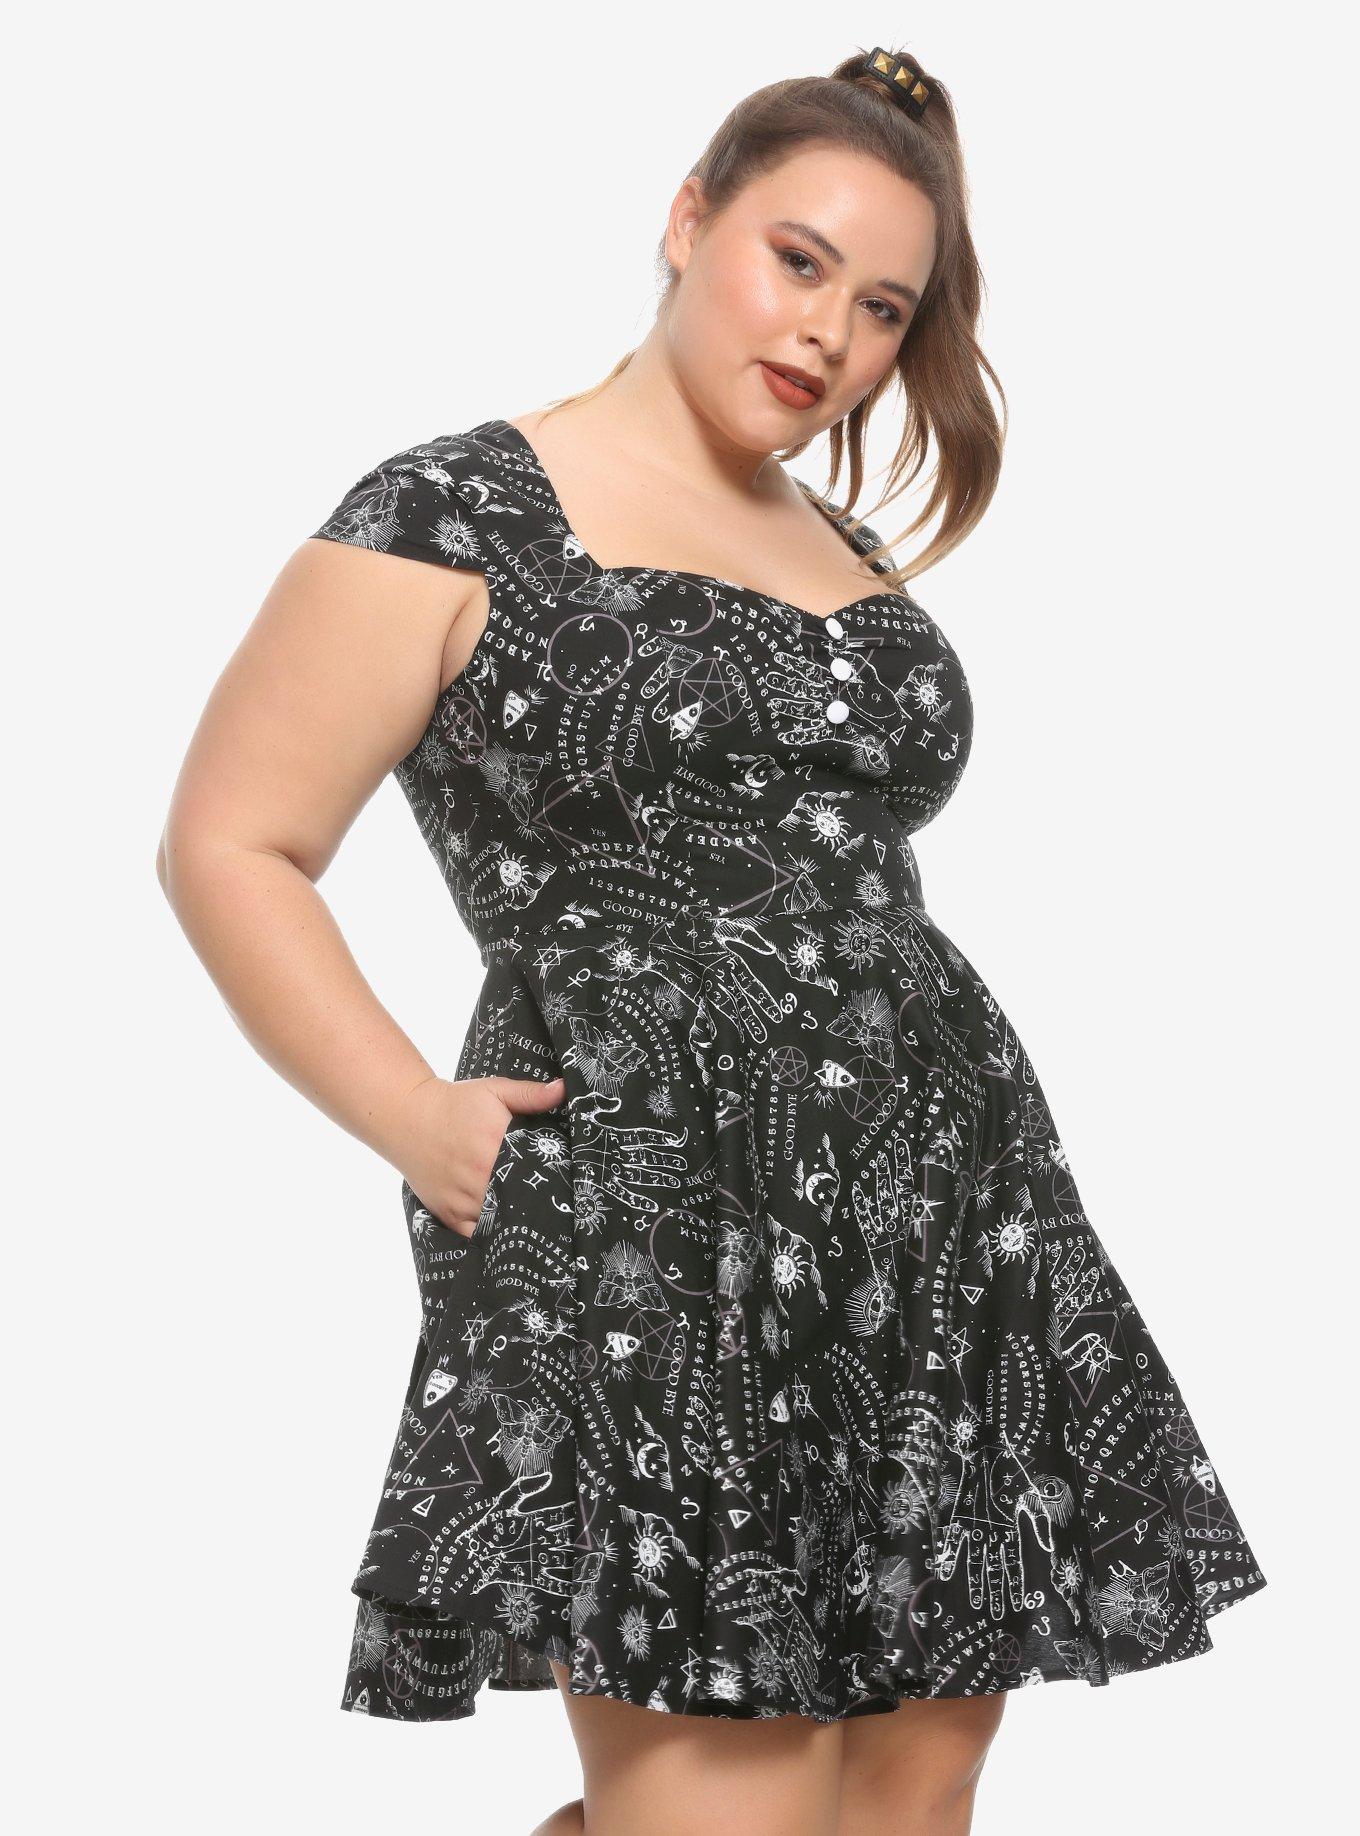 Plus Size - Black Lace Skater Dress - Torrid